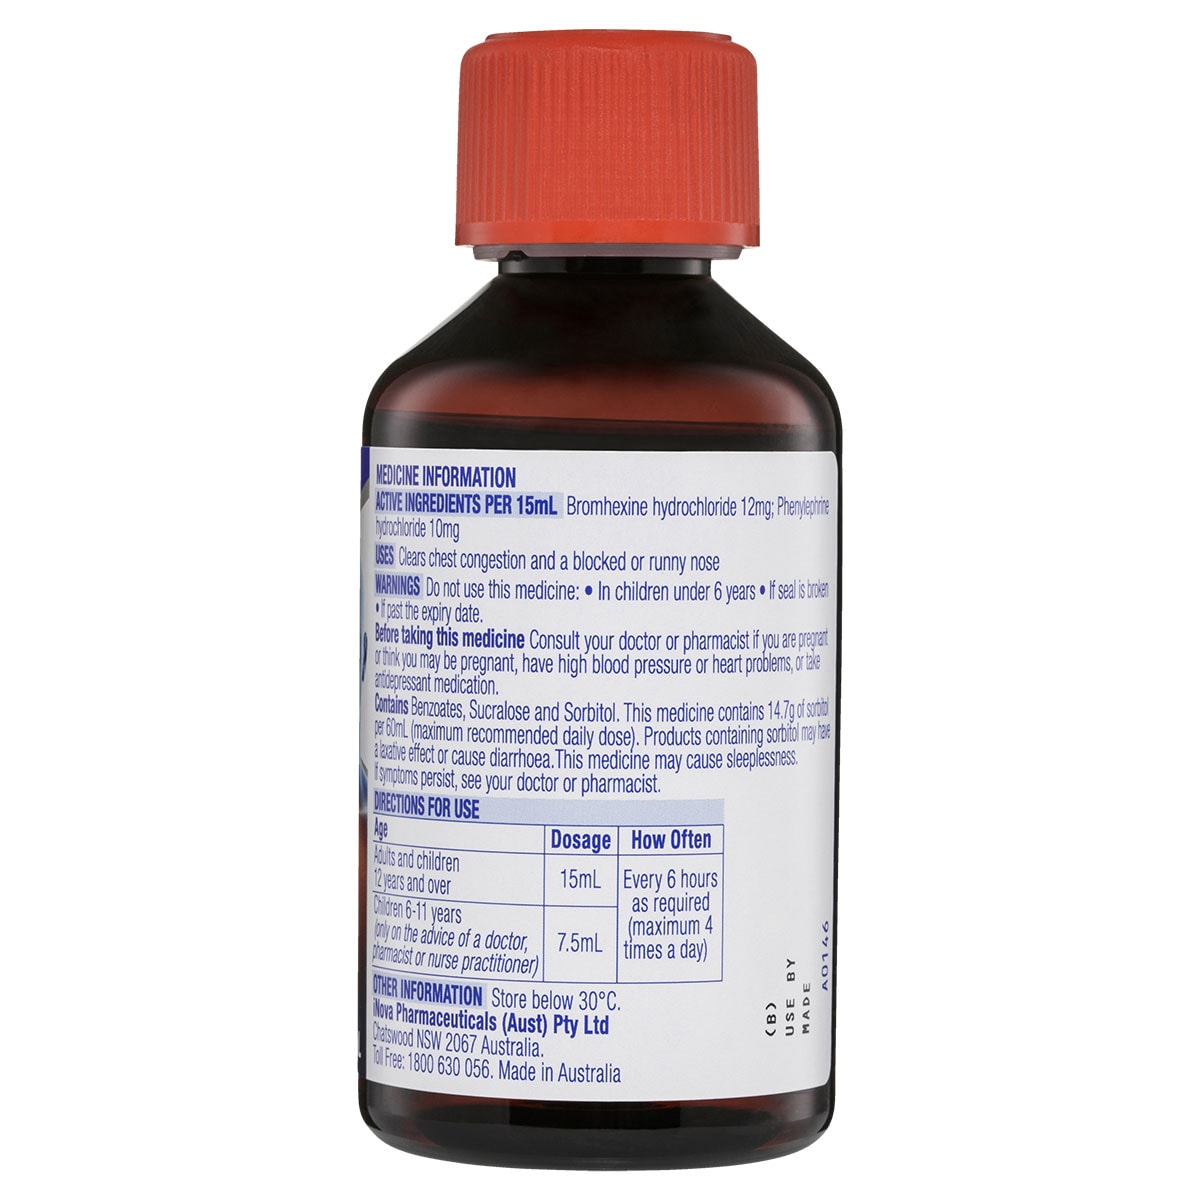 Durotuss PE Chesty Cough Liquid + Nasal Decongestant 200ml